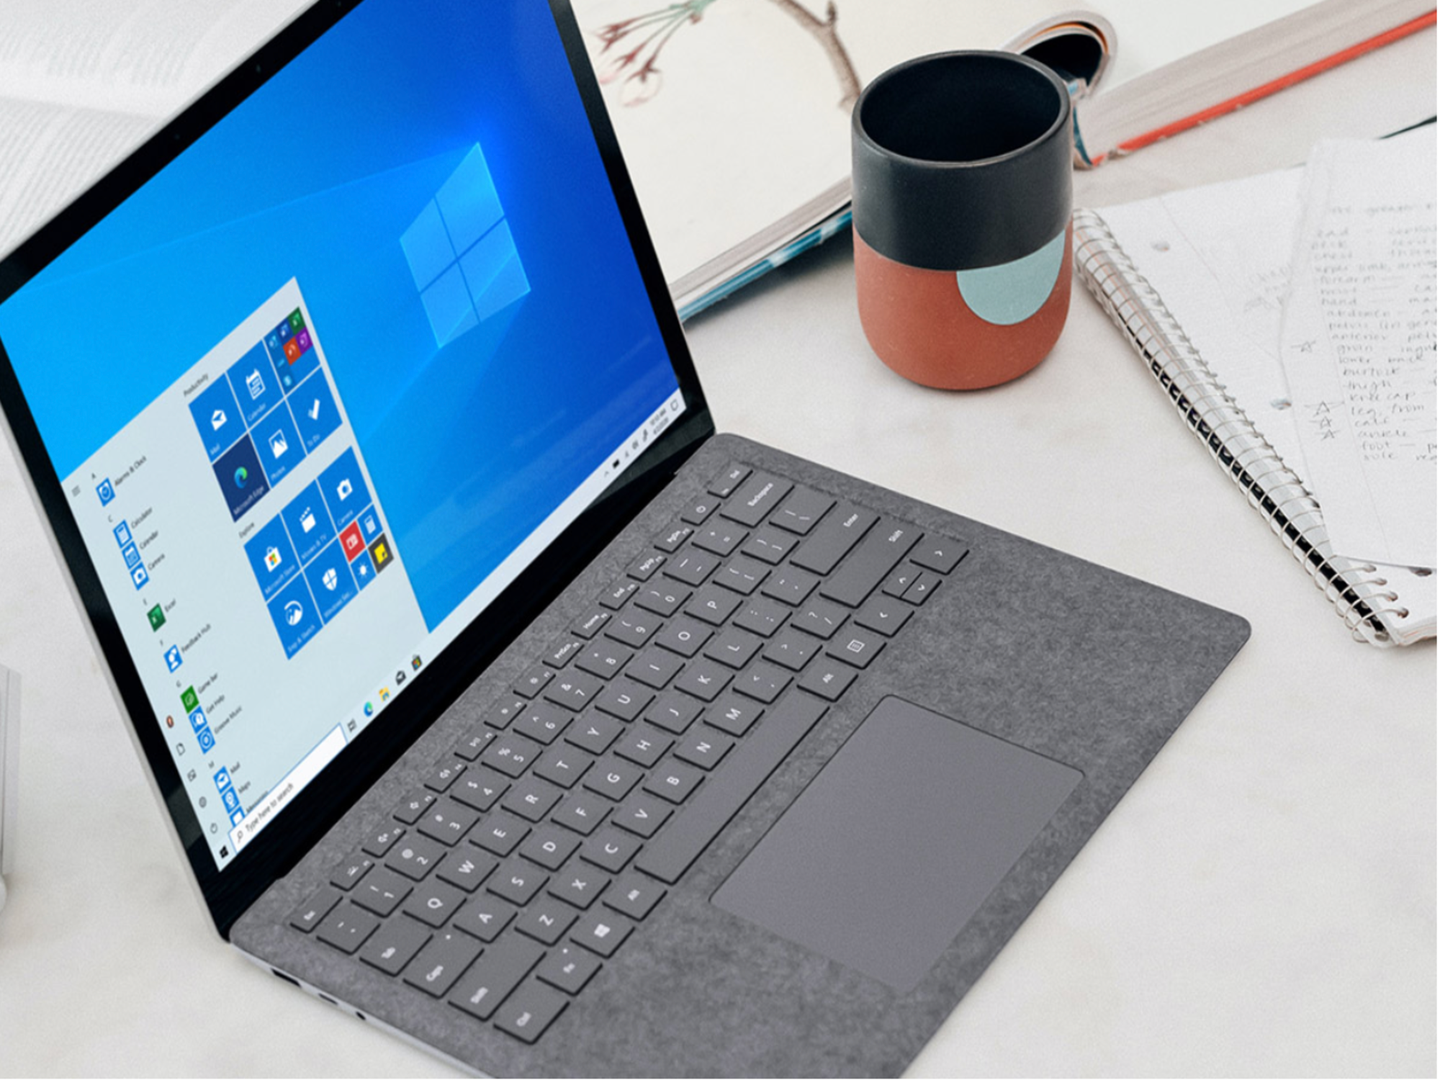 A Microsoft surface laptop running Windows 11 Pro